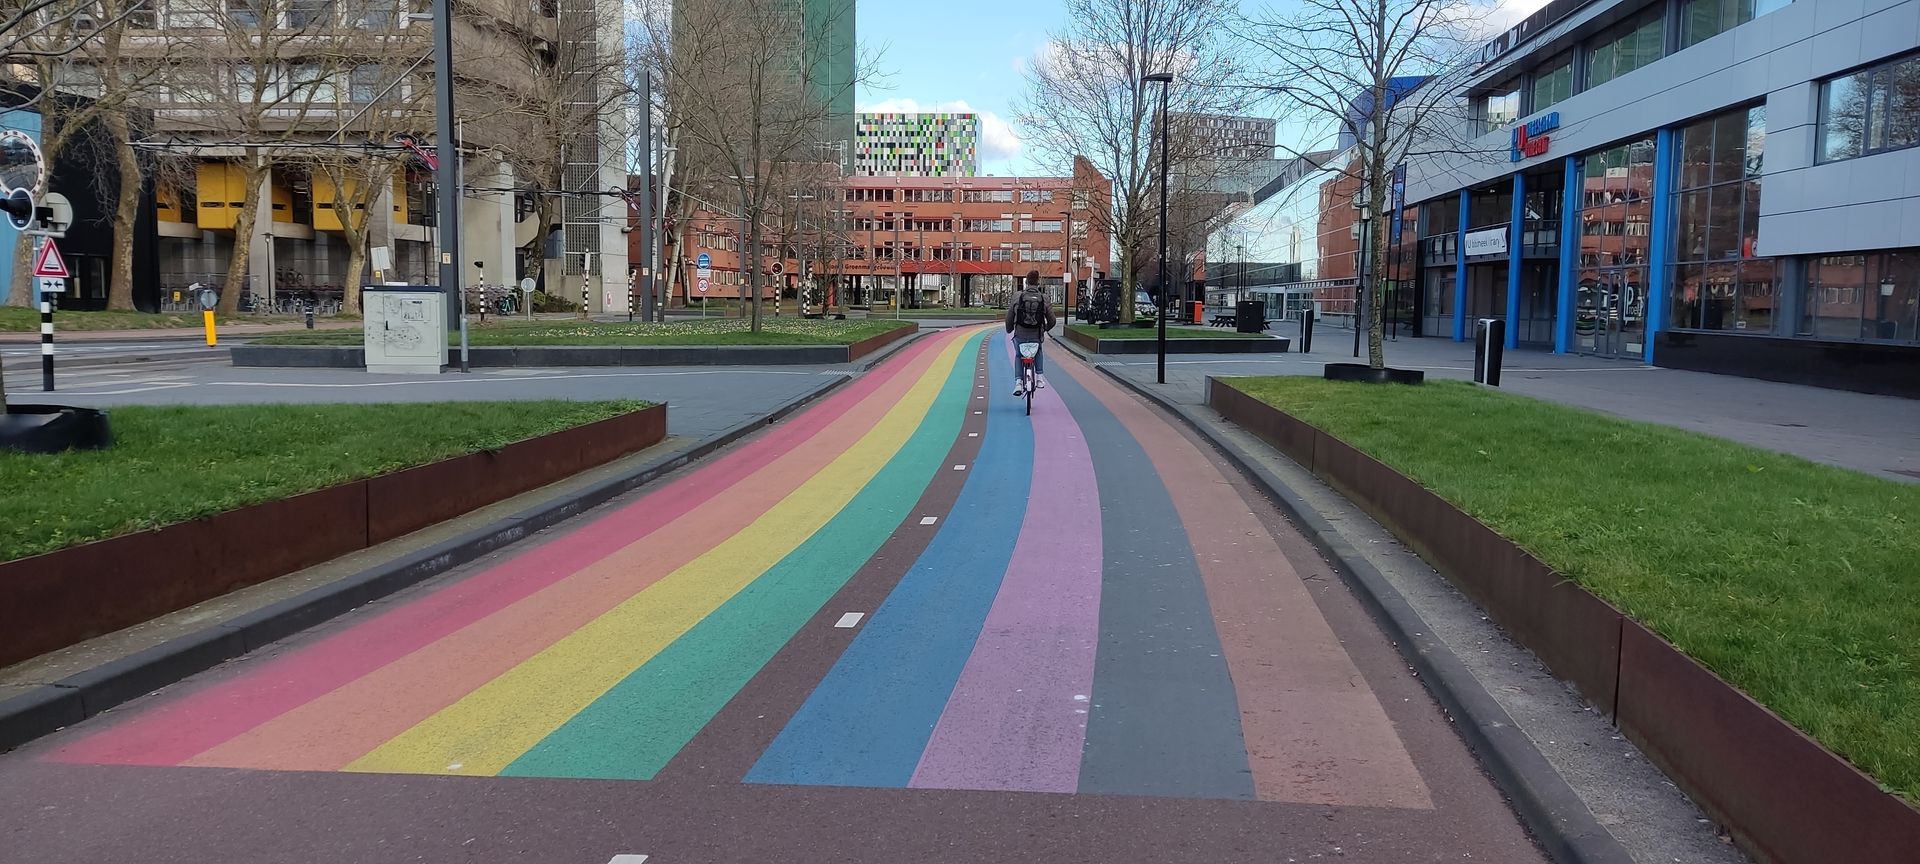 The longest rainbow bike path in the world